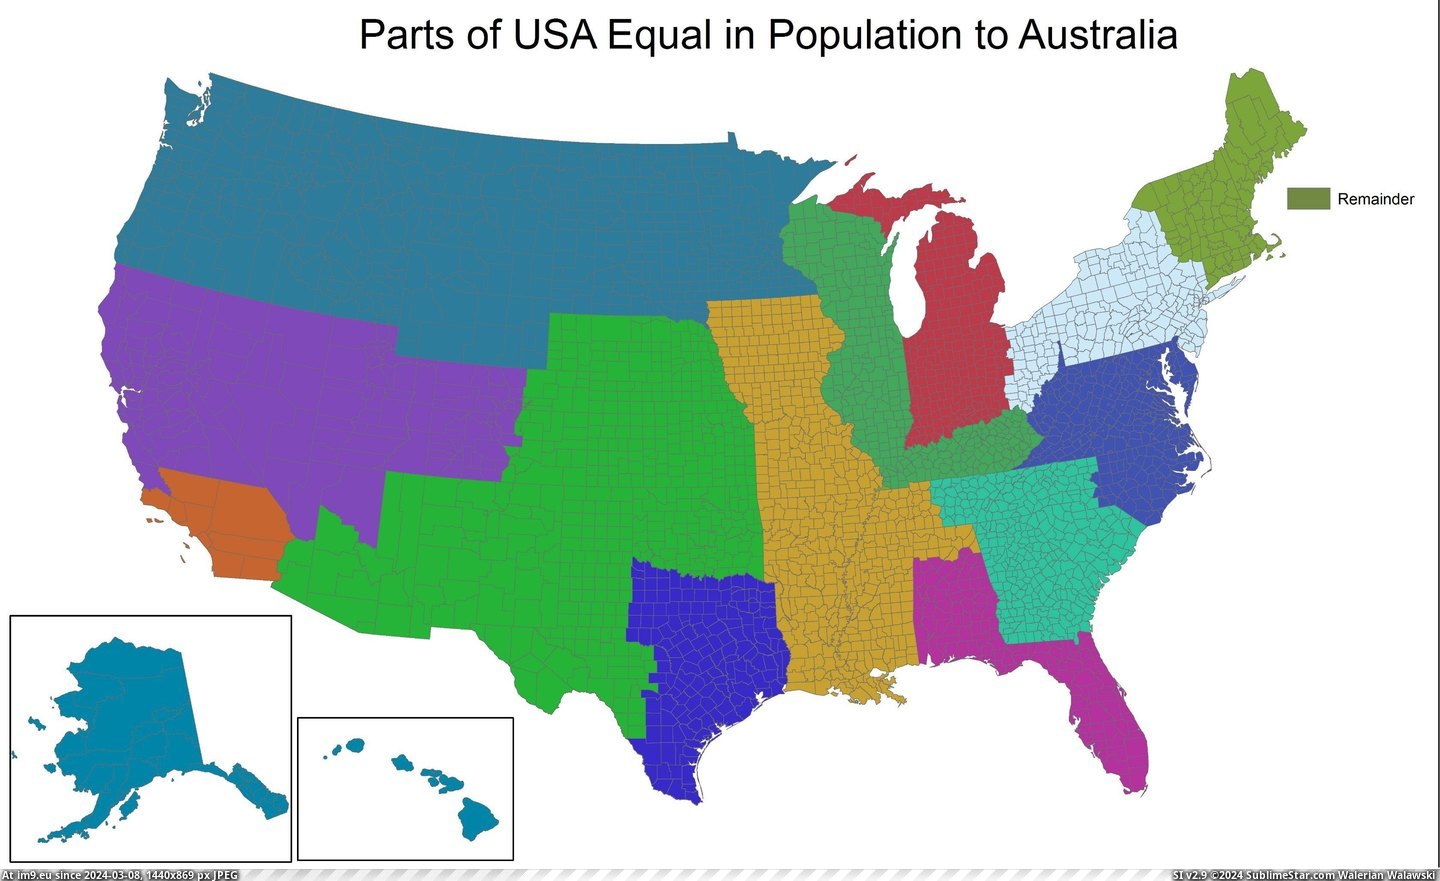 #Parts #Population #Equal #Australia #Usa [Mapporn] Parts of USA Equal in Population to Australia [5600x3400] Pic. (Image of album My r/MAPS favs))